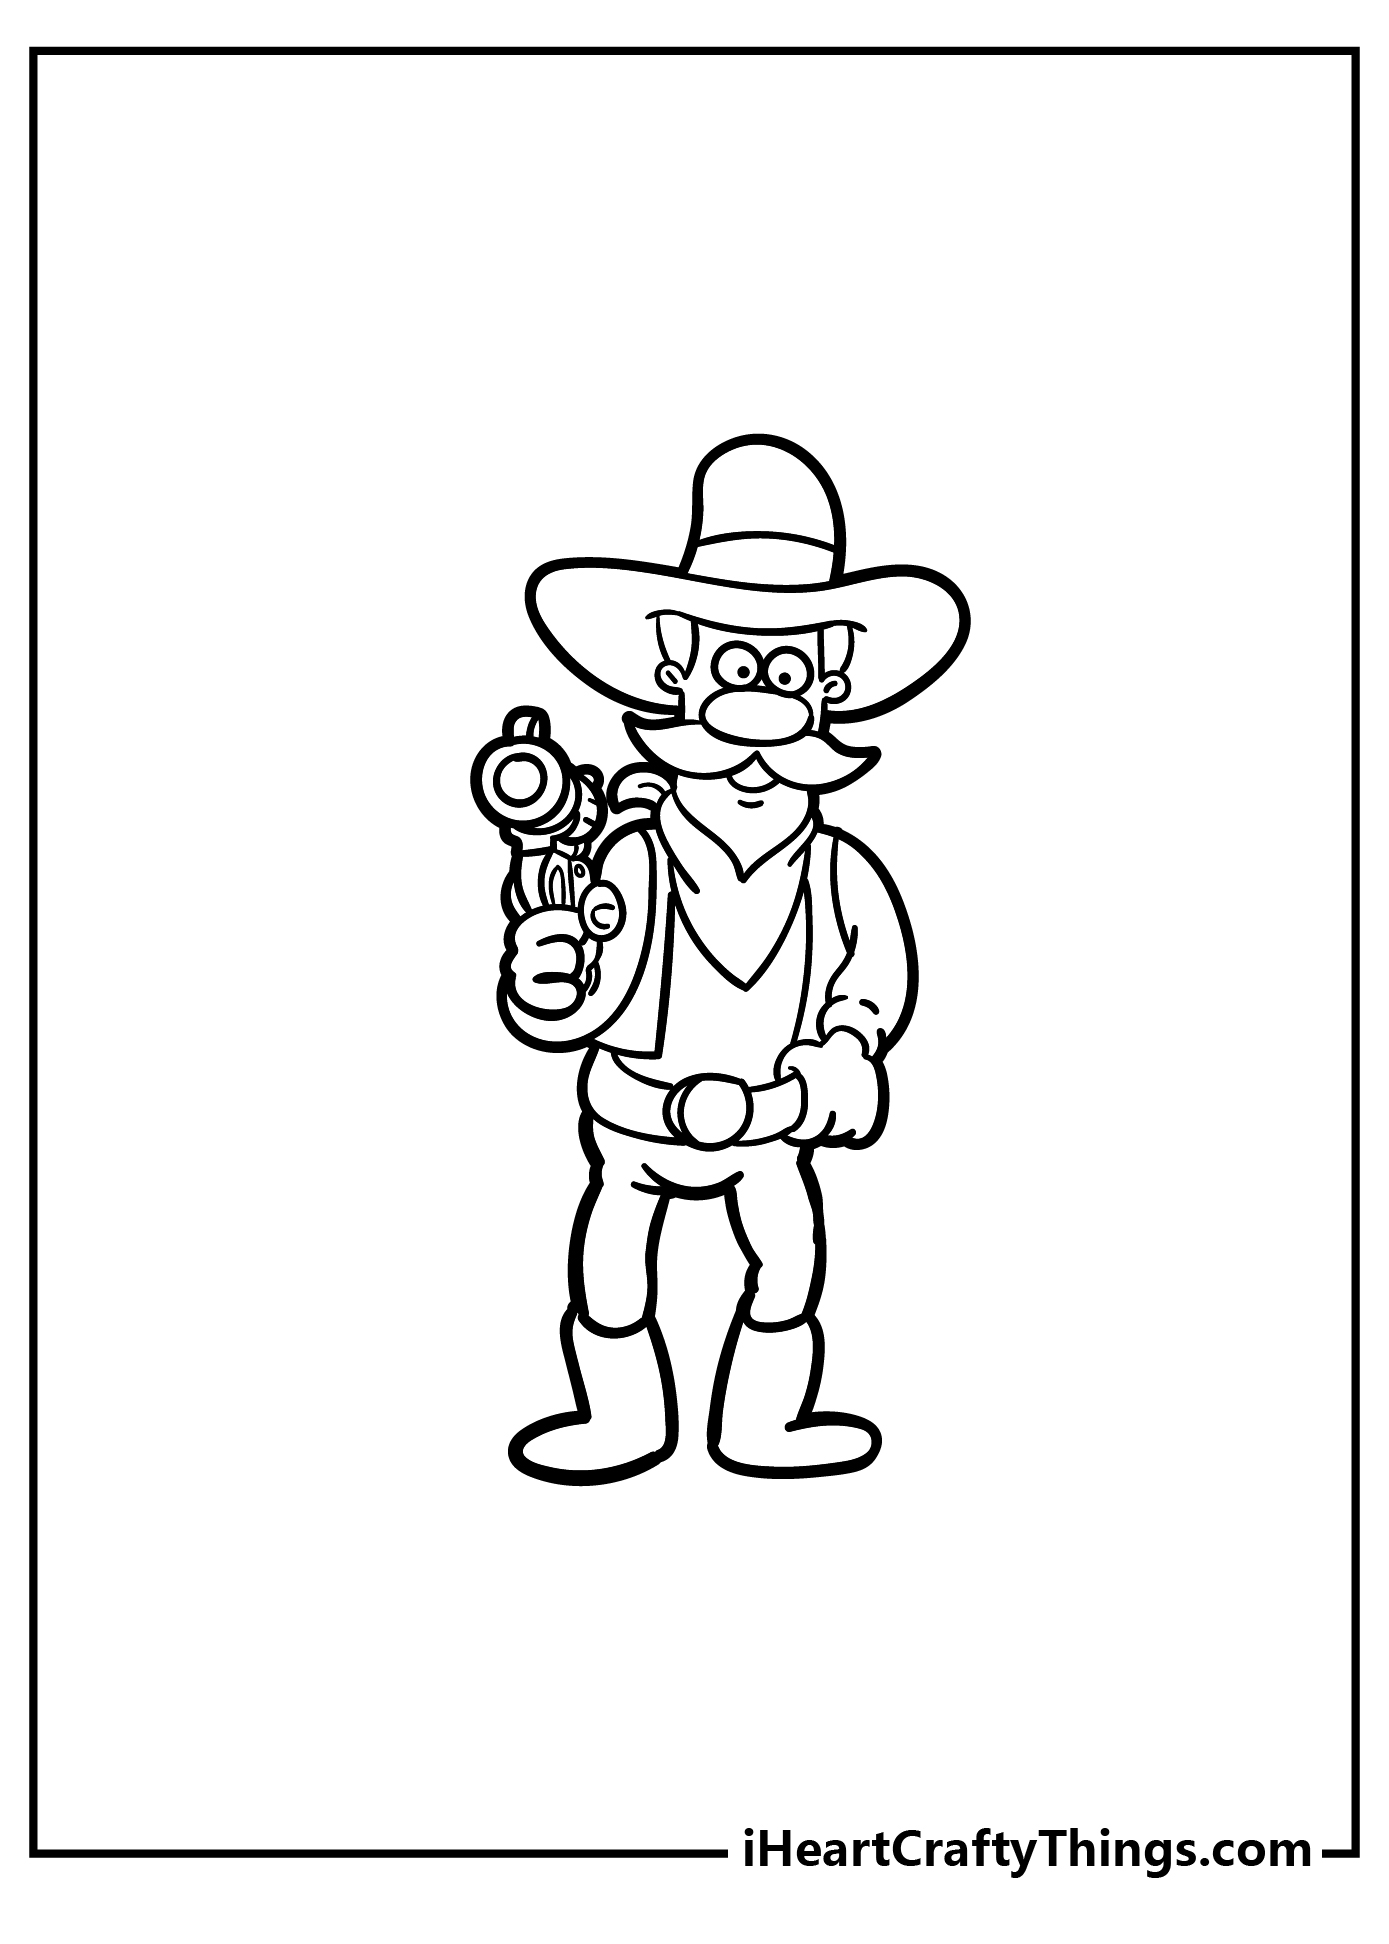 Cowboy Coloring Pages free pdf download